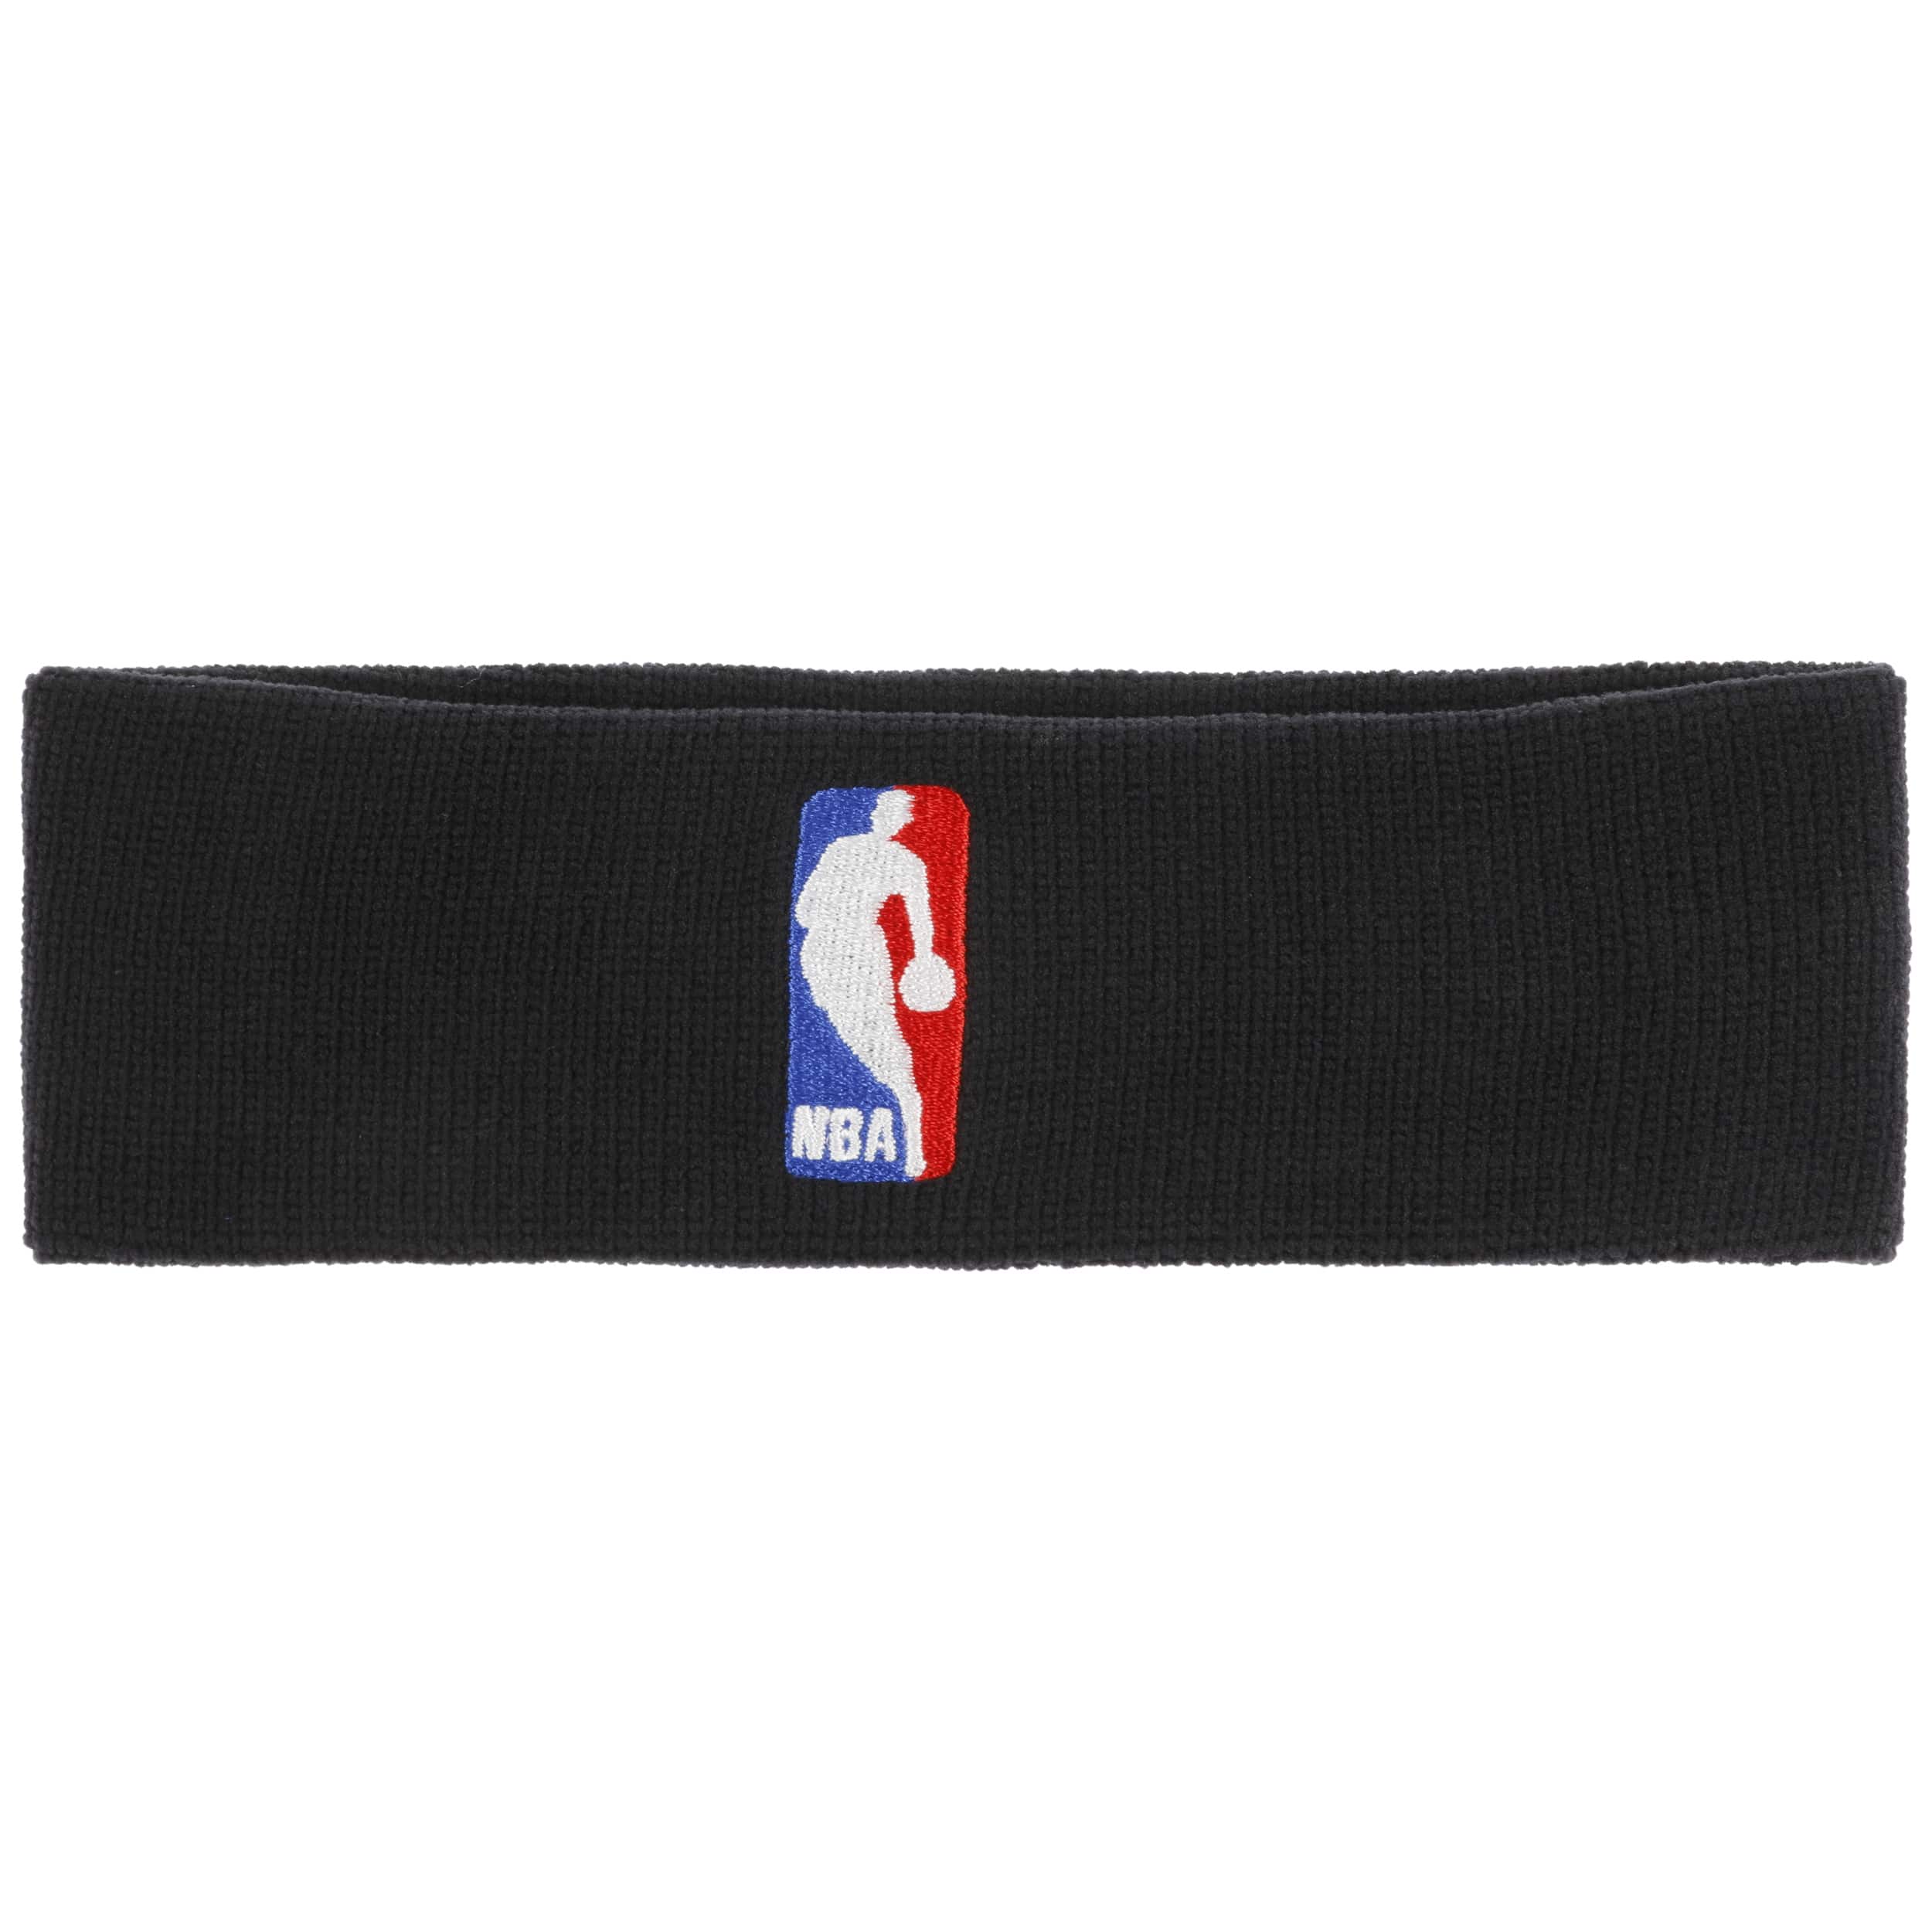 Elite NBA Headband by Nike - 22,95 €